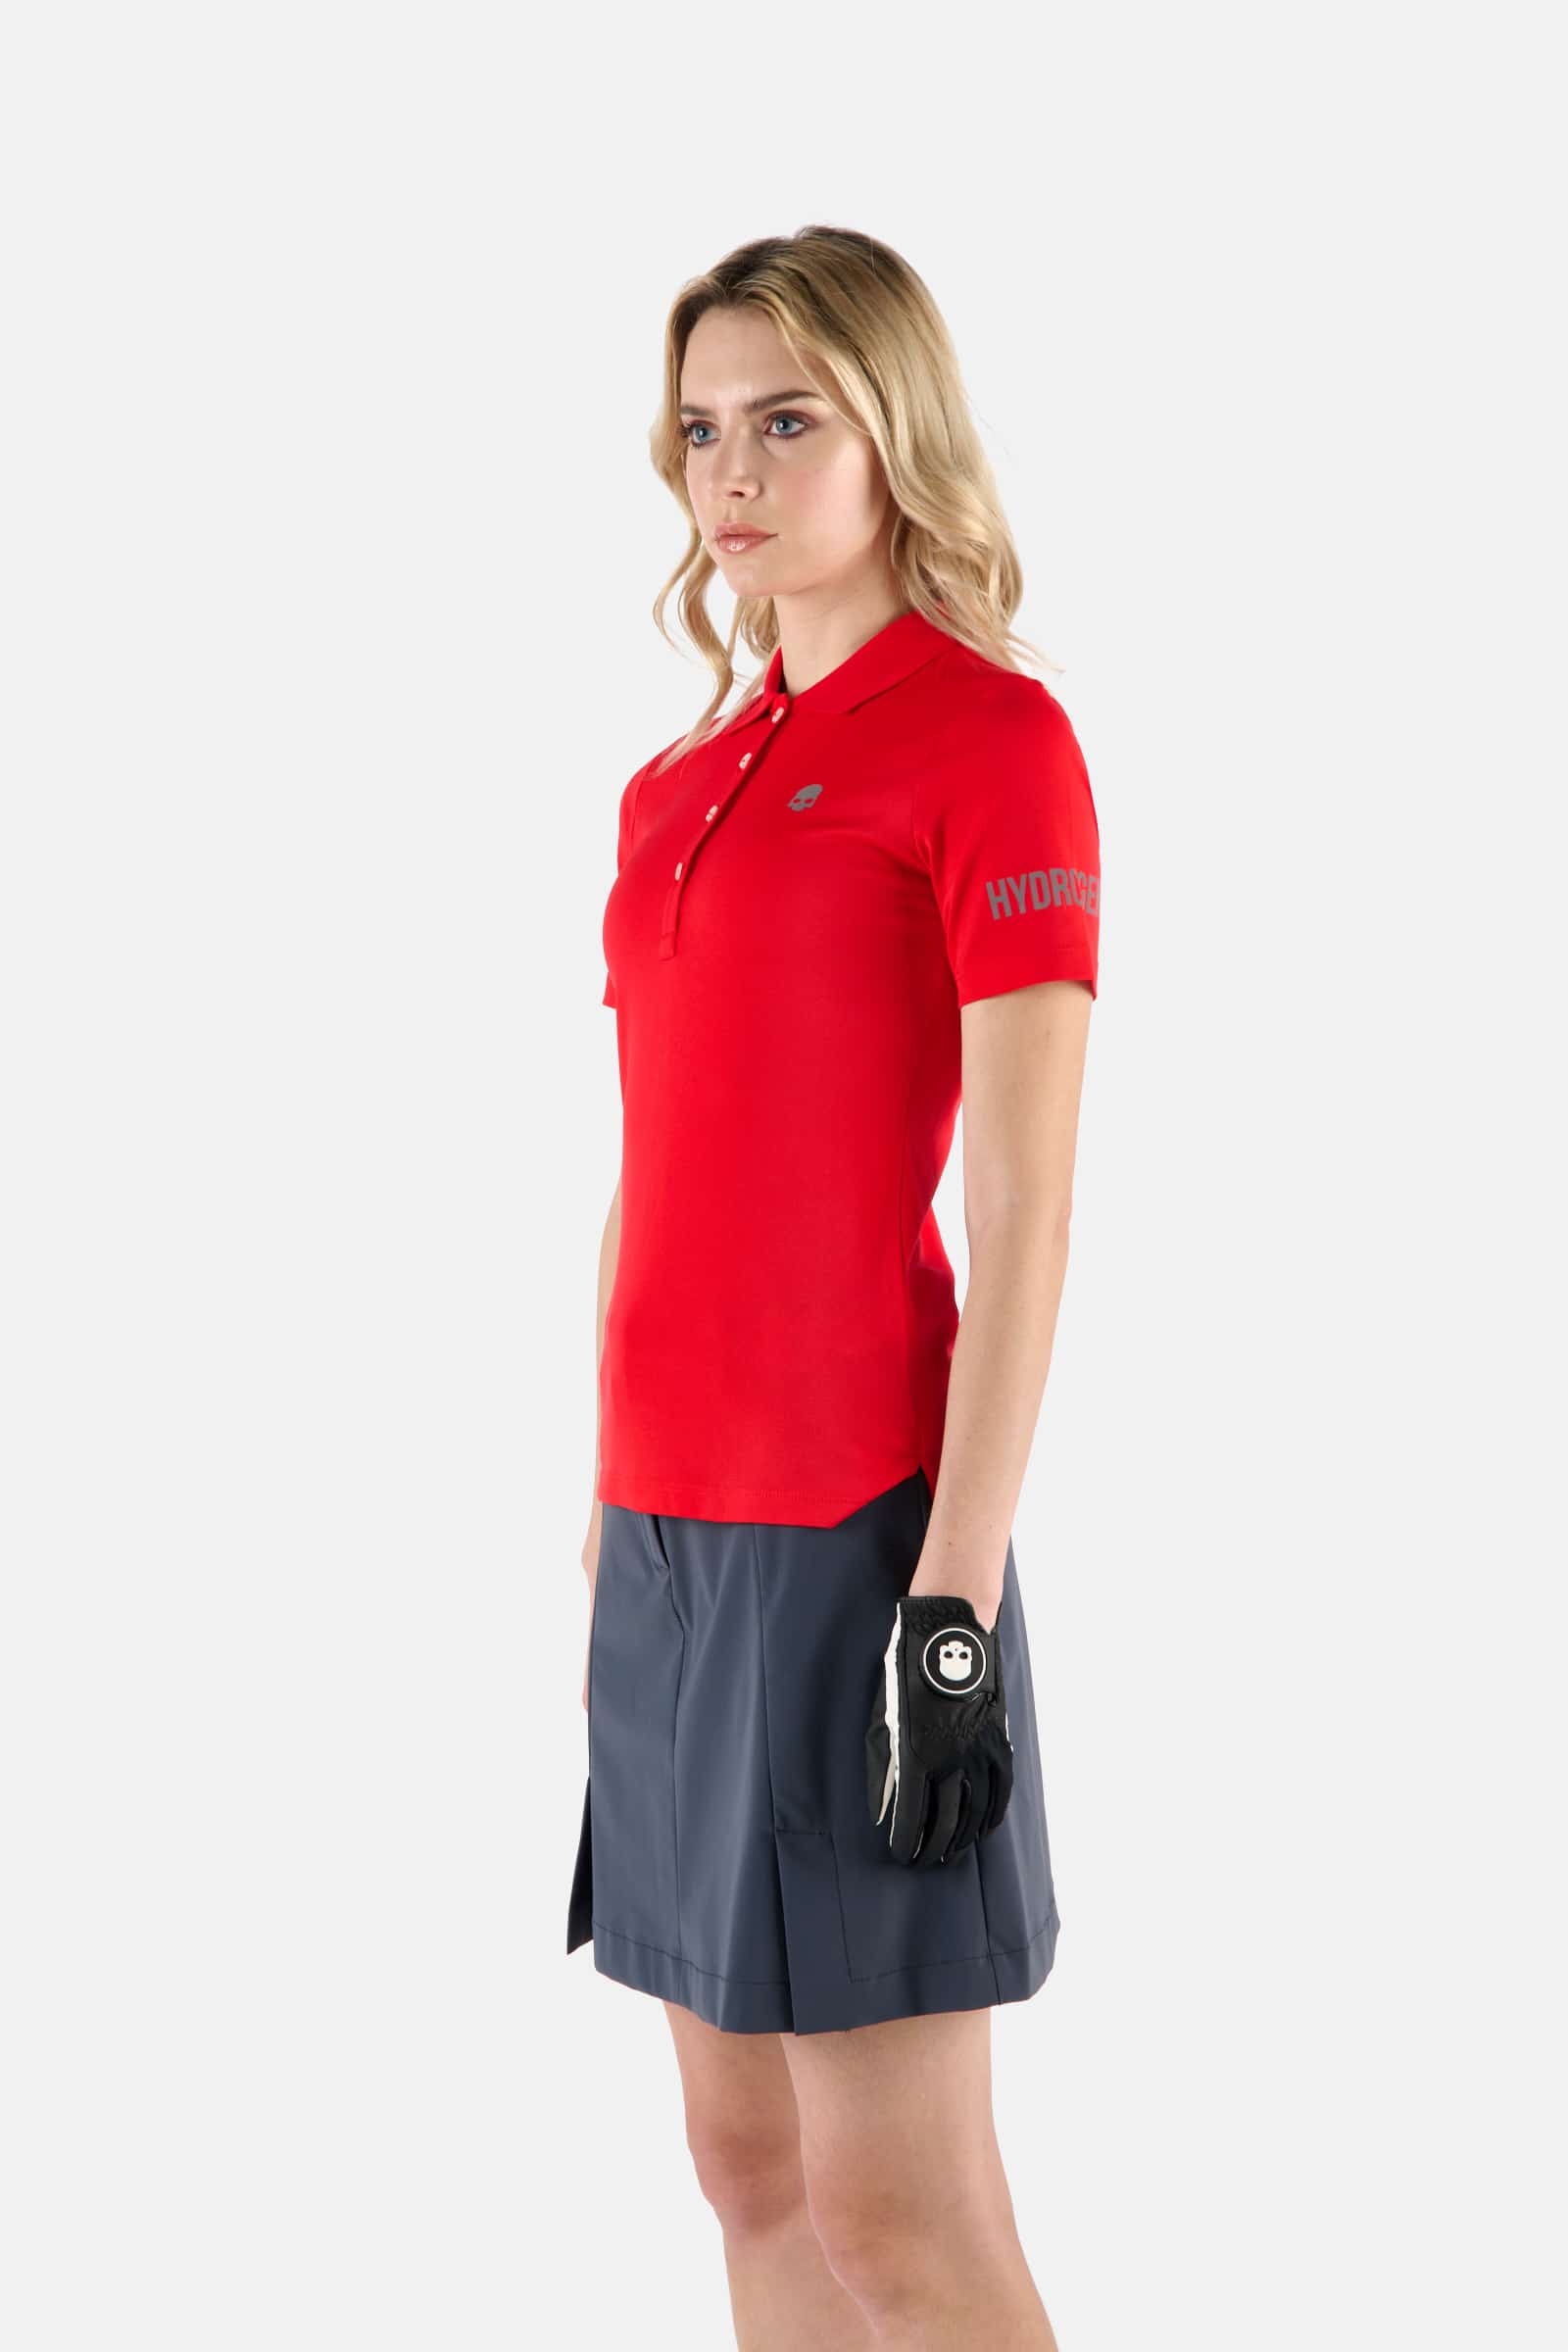 GOLF PIQUET POLO - RED - Hydrogen - Luxury Sportwear